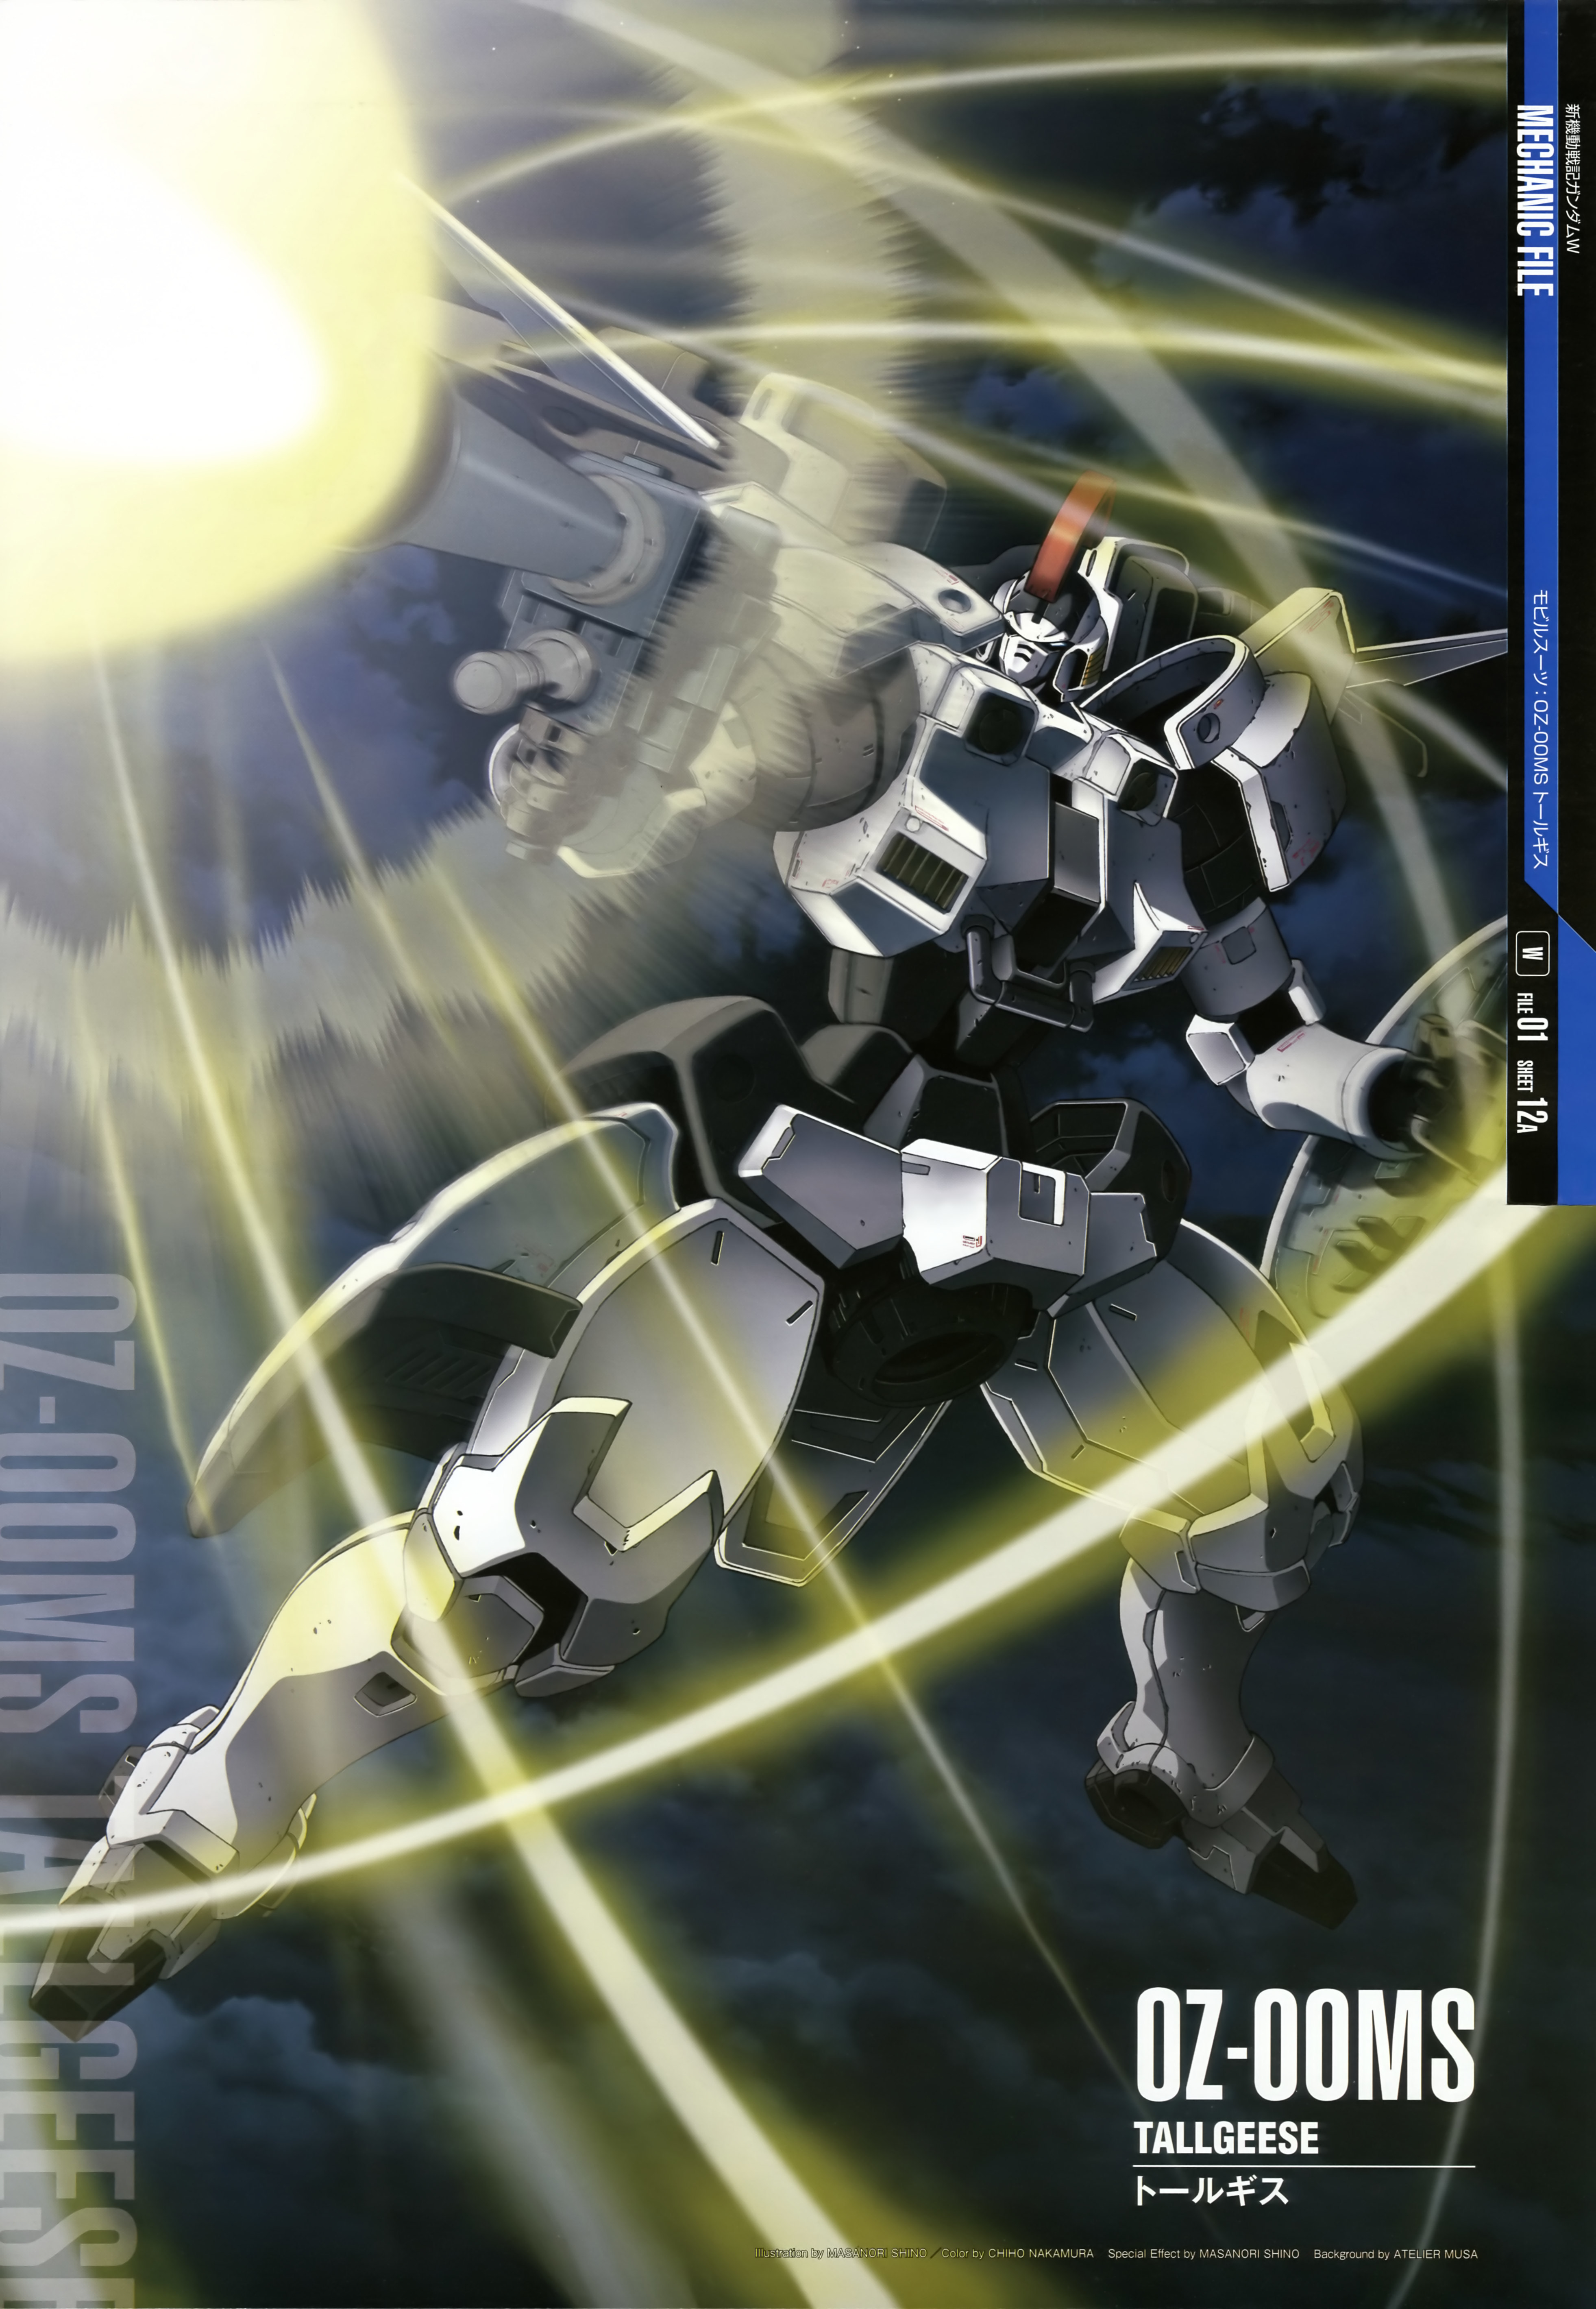 Tallgeese Anime Mechs Mobile Suit Gundam Wing Super Robot Taisen Mobile Suit Artwork Digital Art 3925x5677